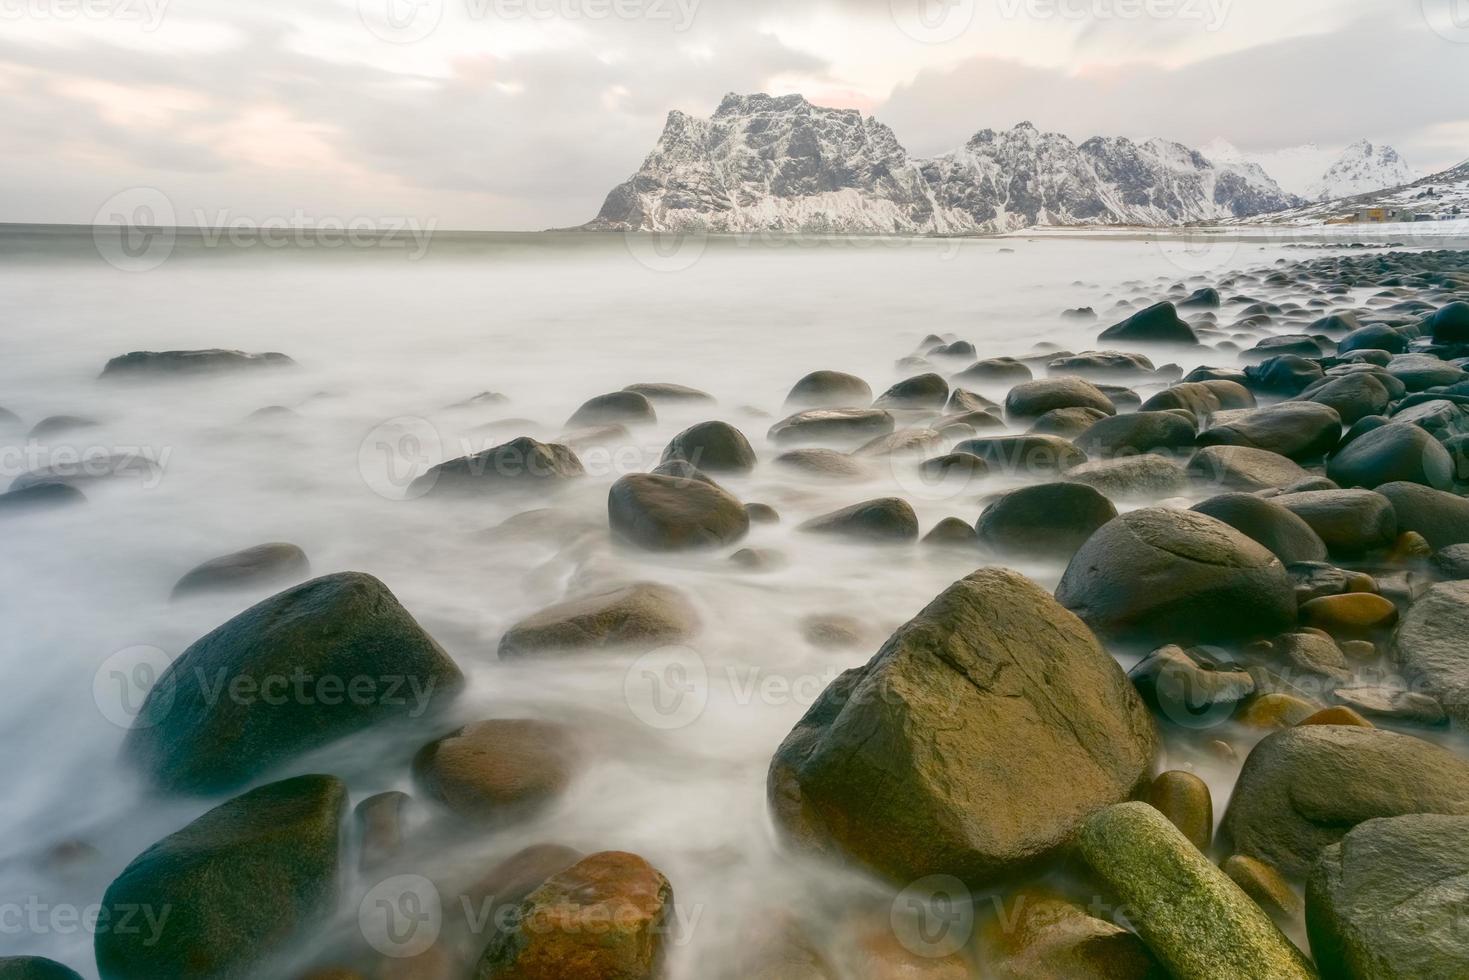 ondas fluindo sobre a praia de utakleiv, ilhas lofoten, noruega no inverno. foto